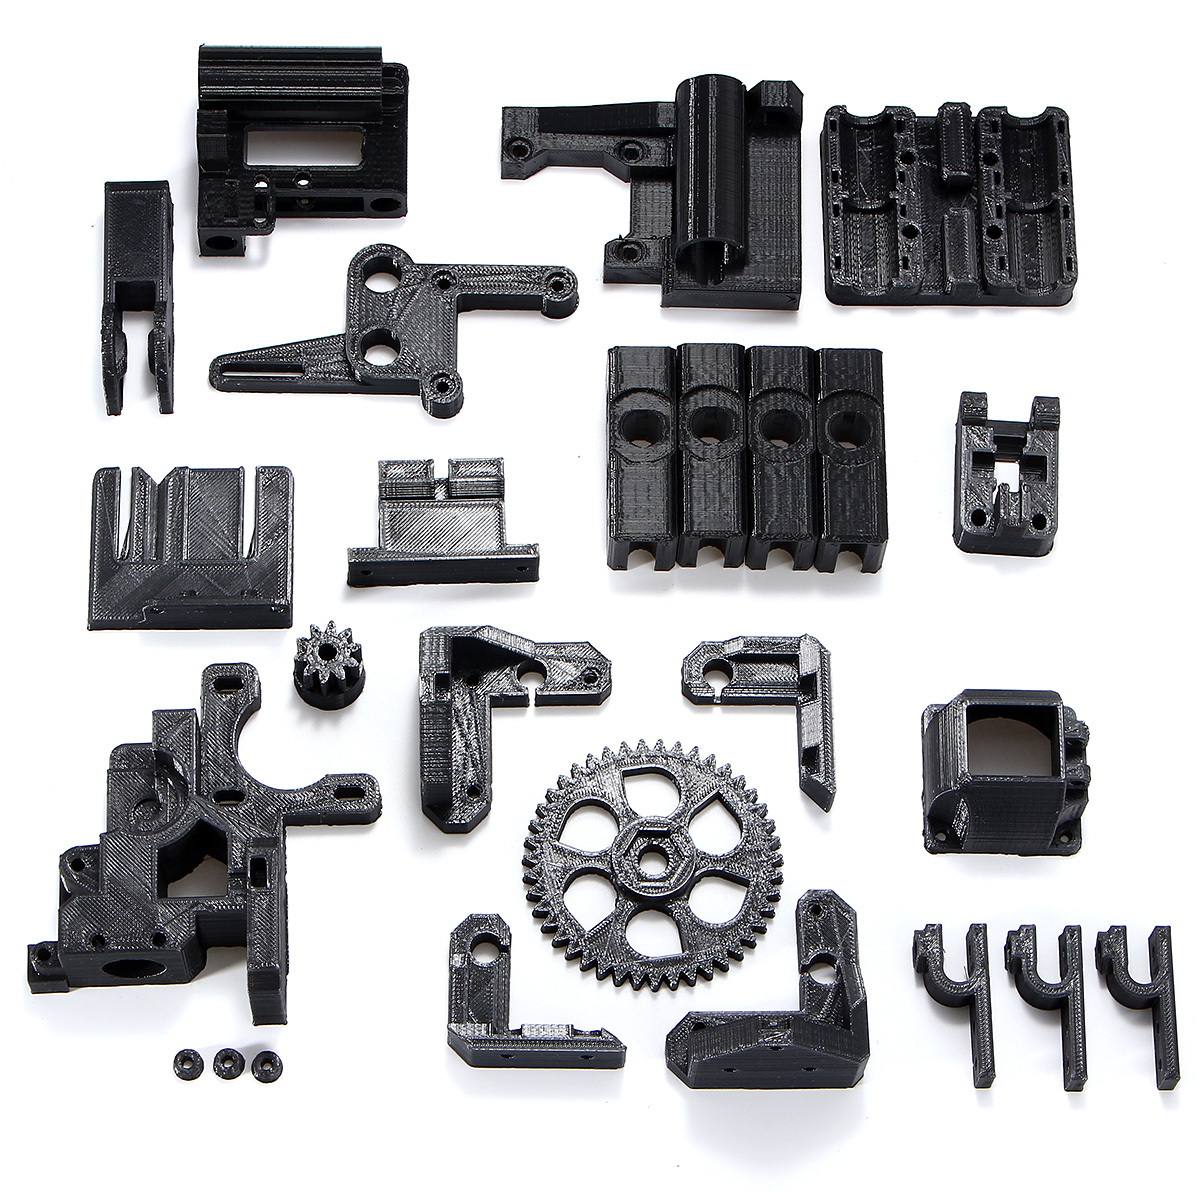 Black ABS Filament Black 3D Printed Accessories Parts DIY Kit For RepRap Prusa i3 3D Printer 1